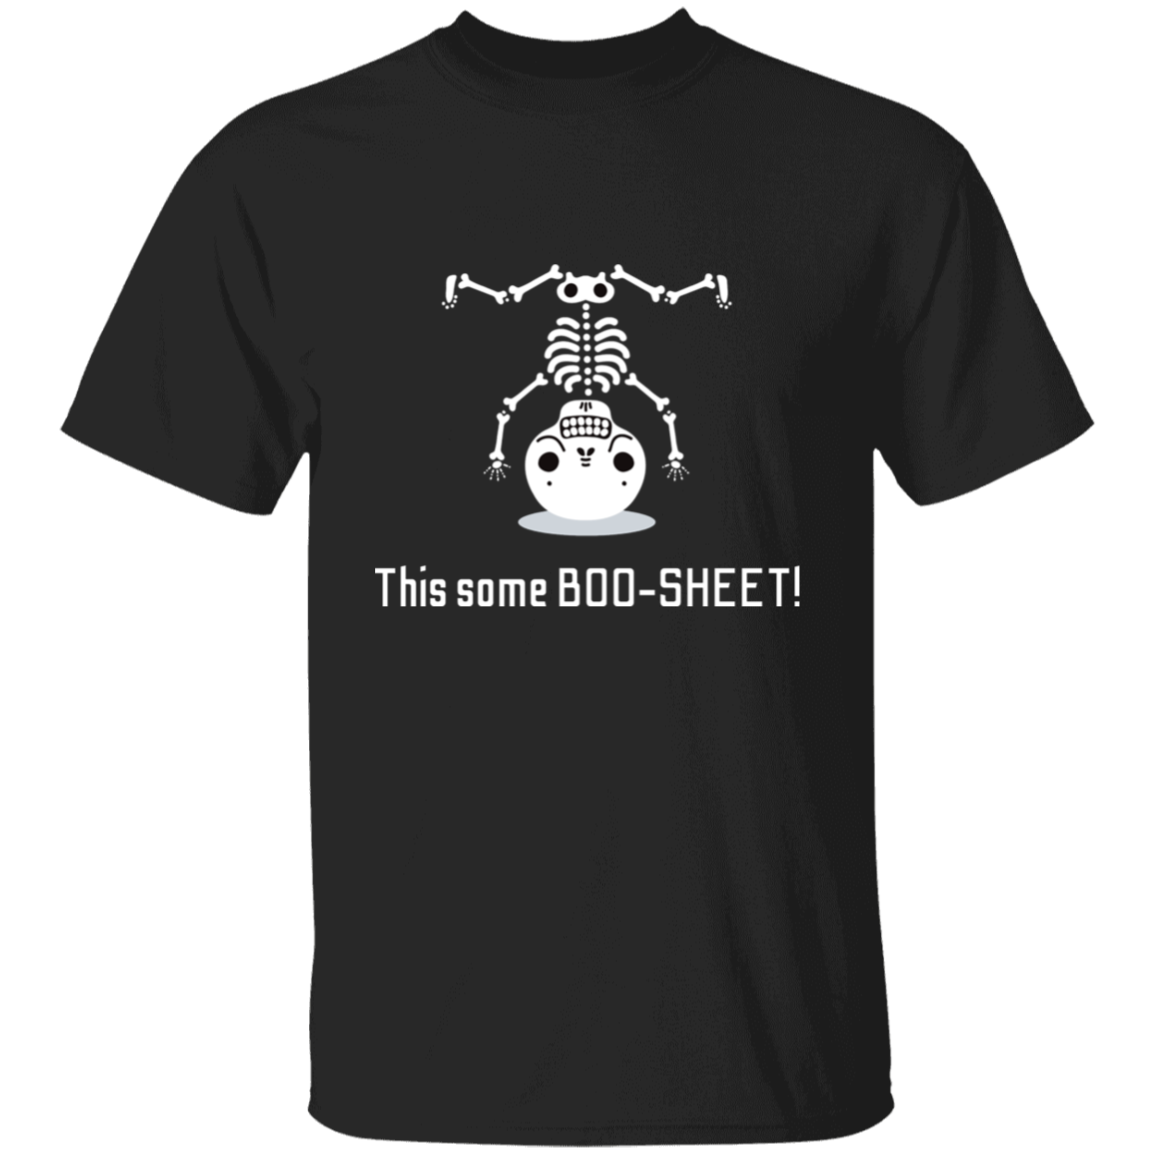 BOO-SHEET T shirt